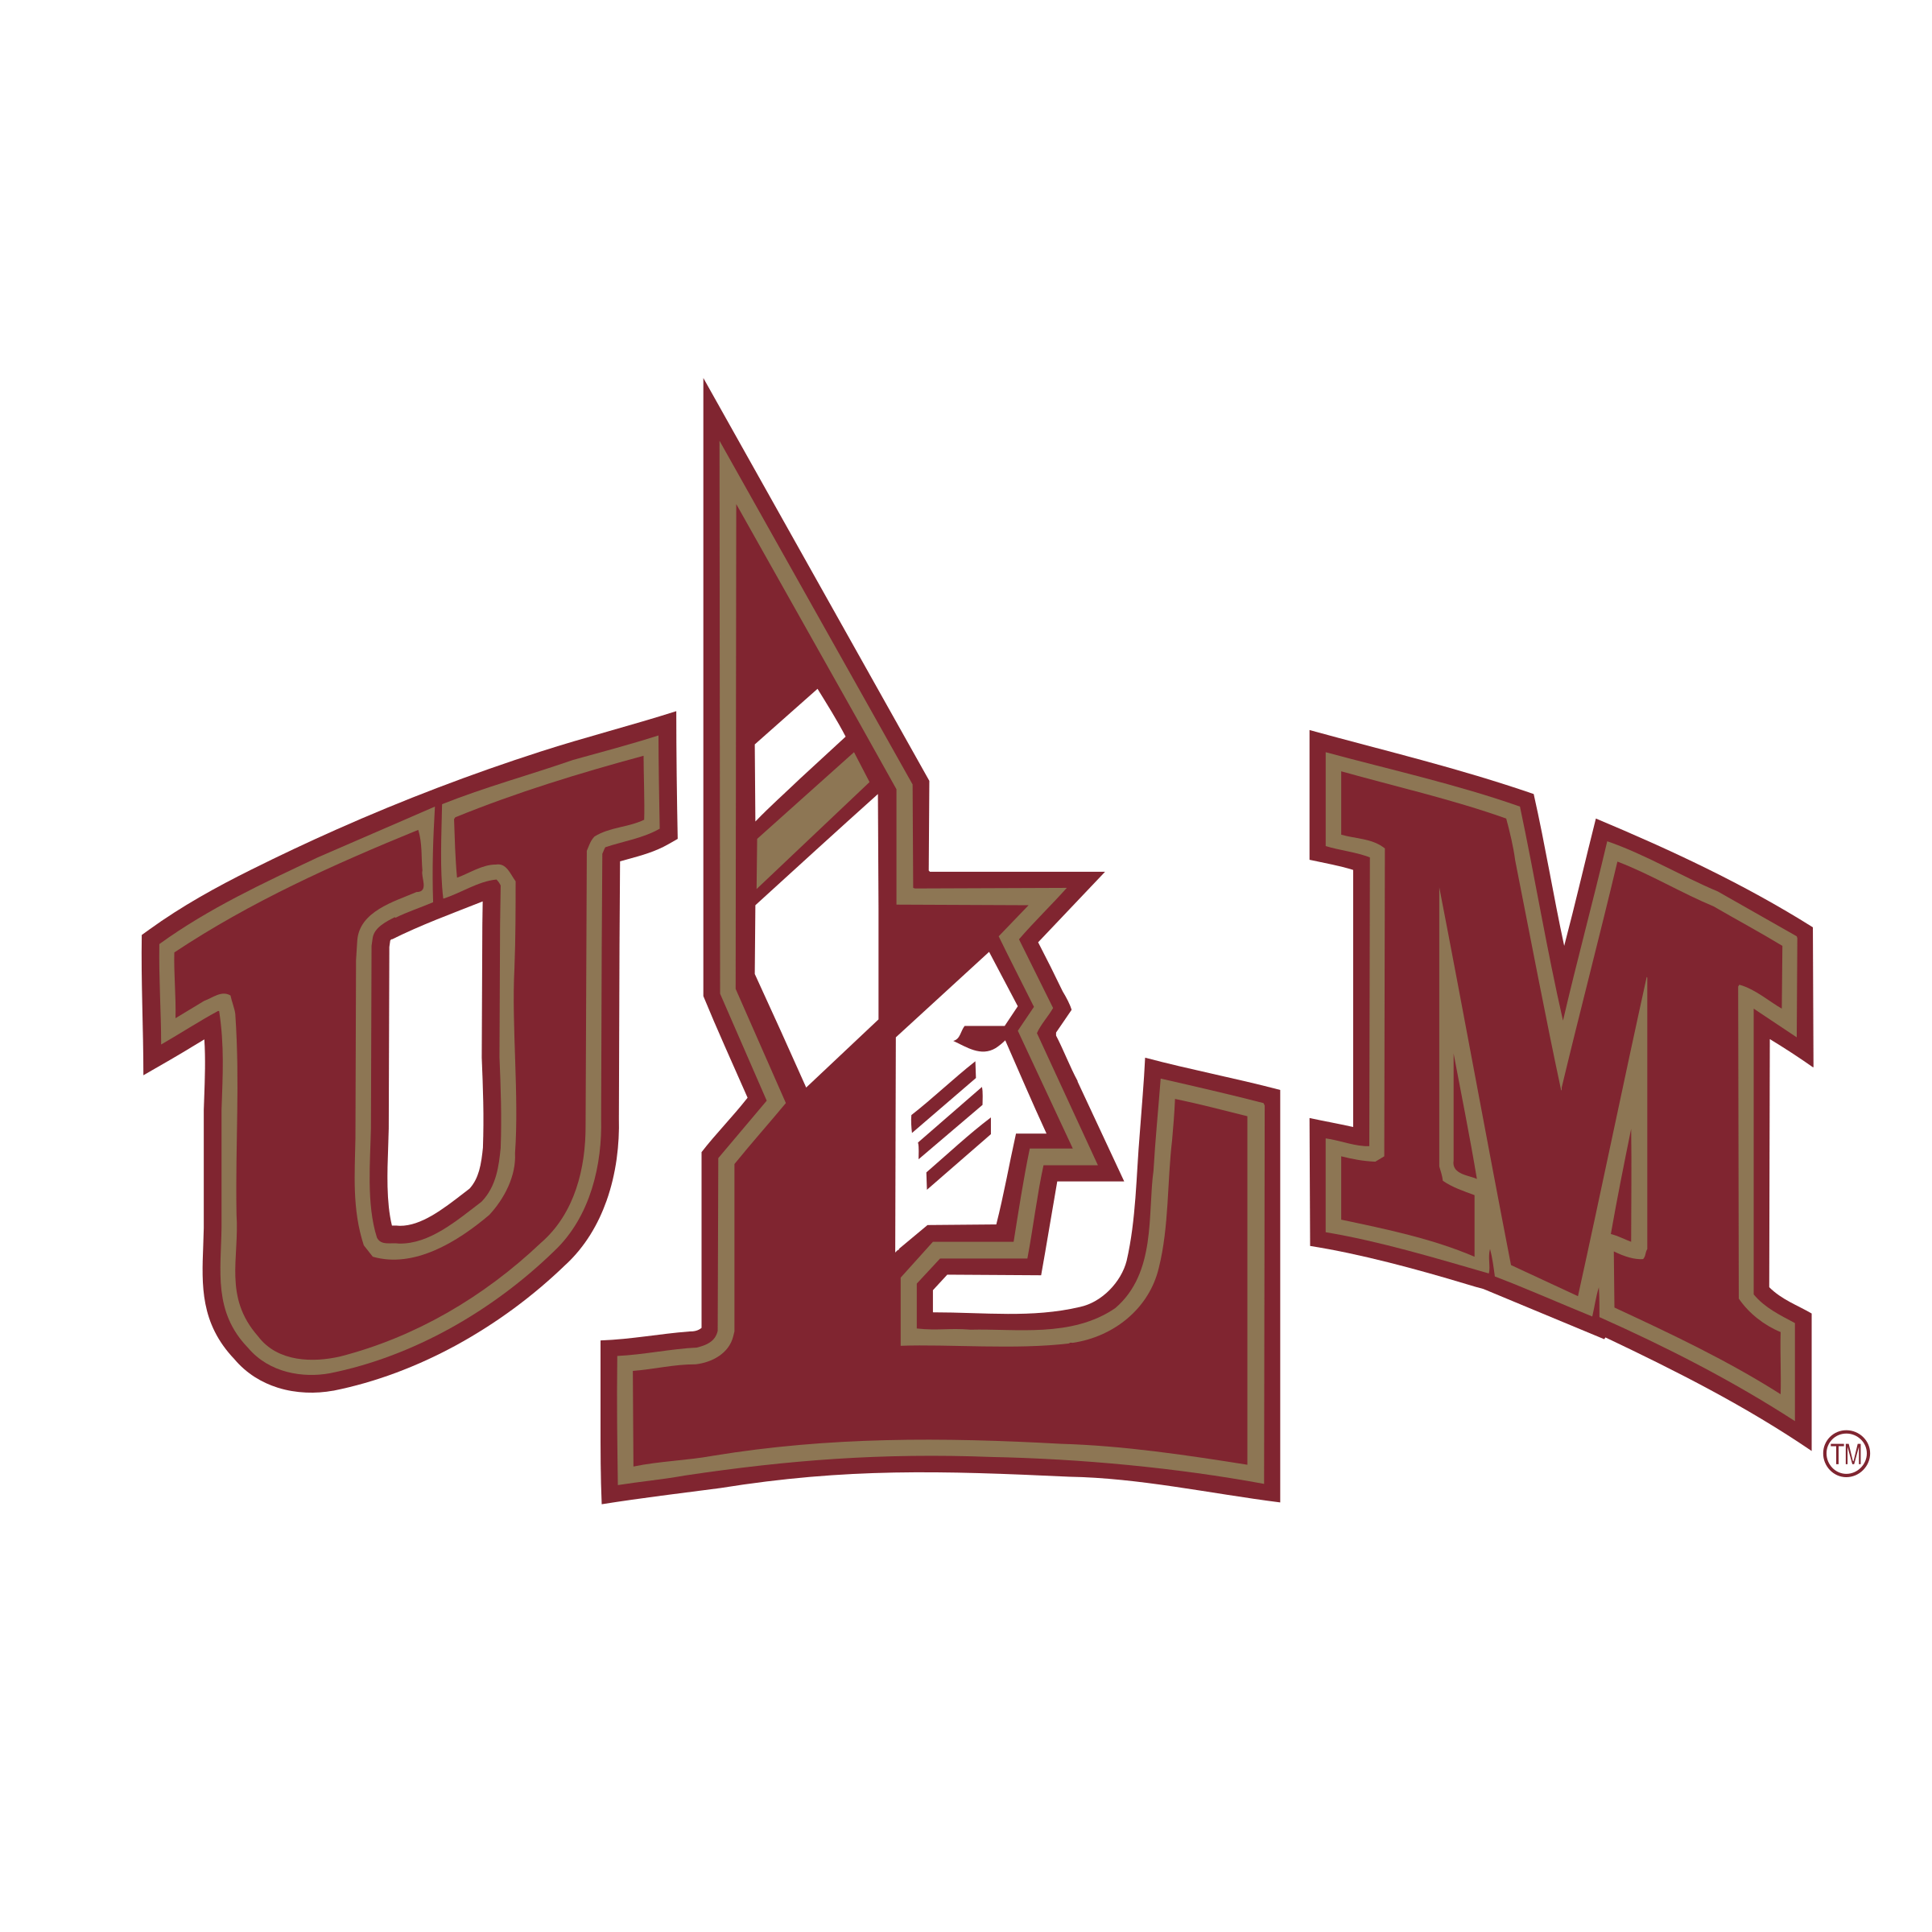 Ulm Logo - ULM Athletics Logo PNG Transparent & SVG Vector - Freebie Supply